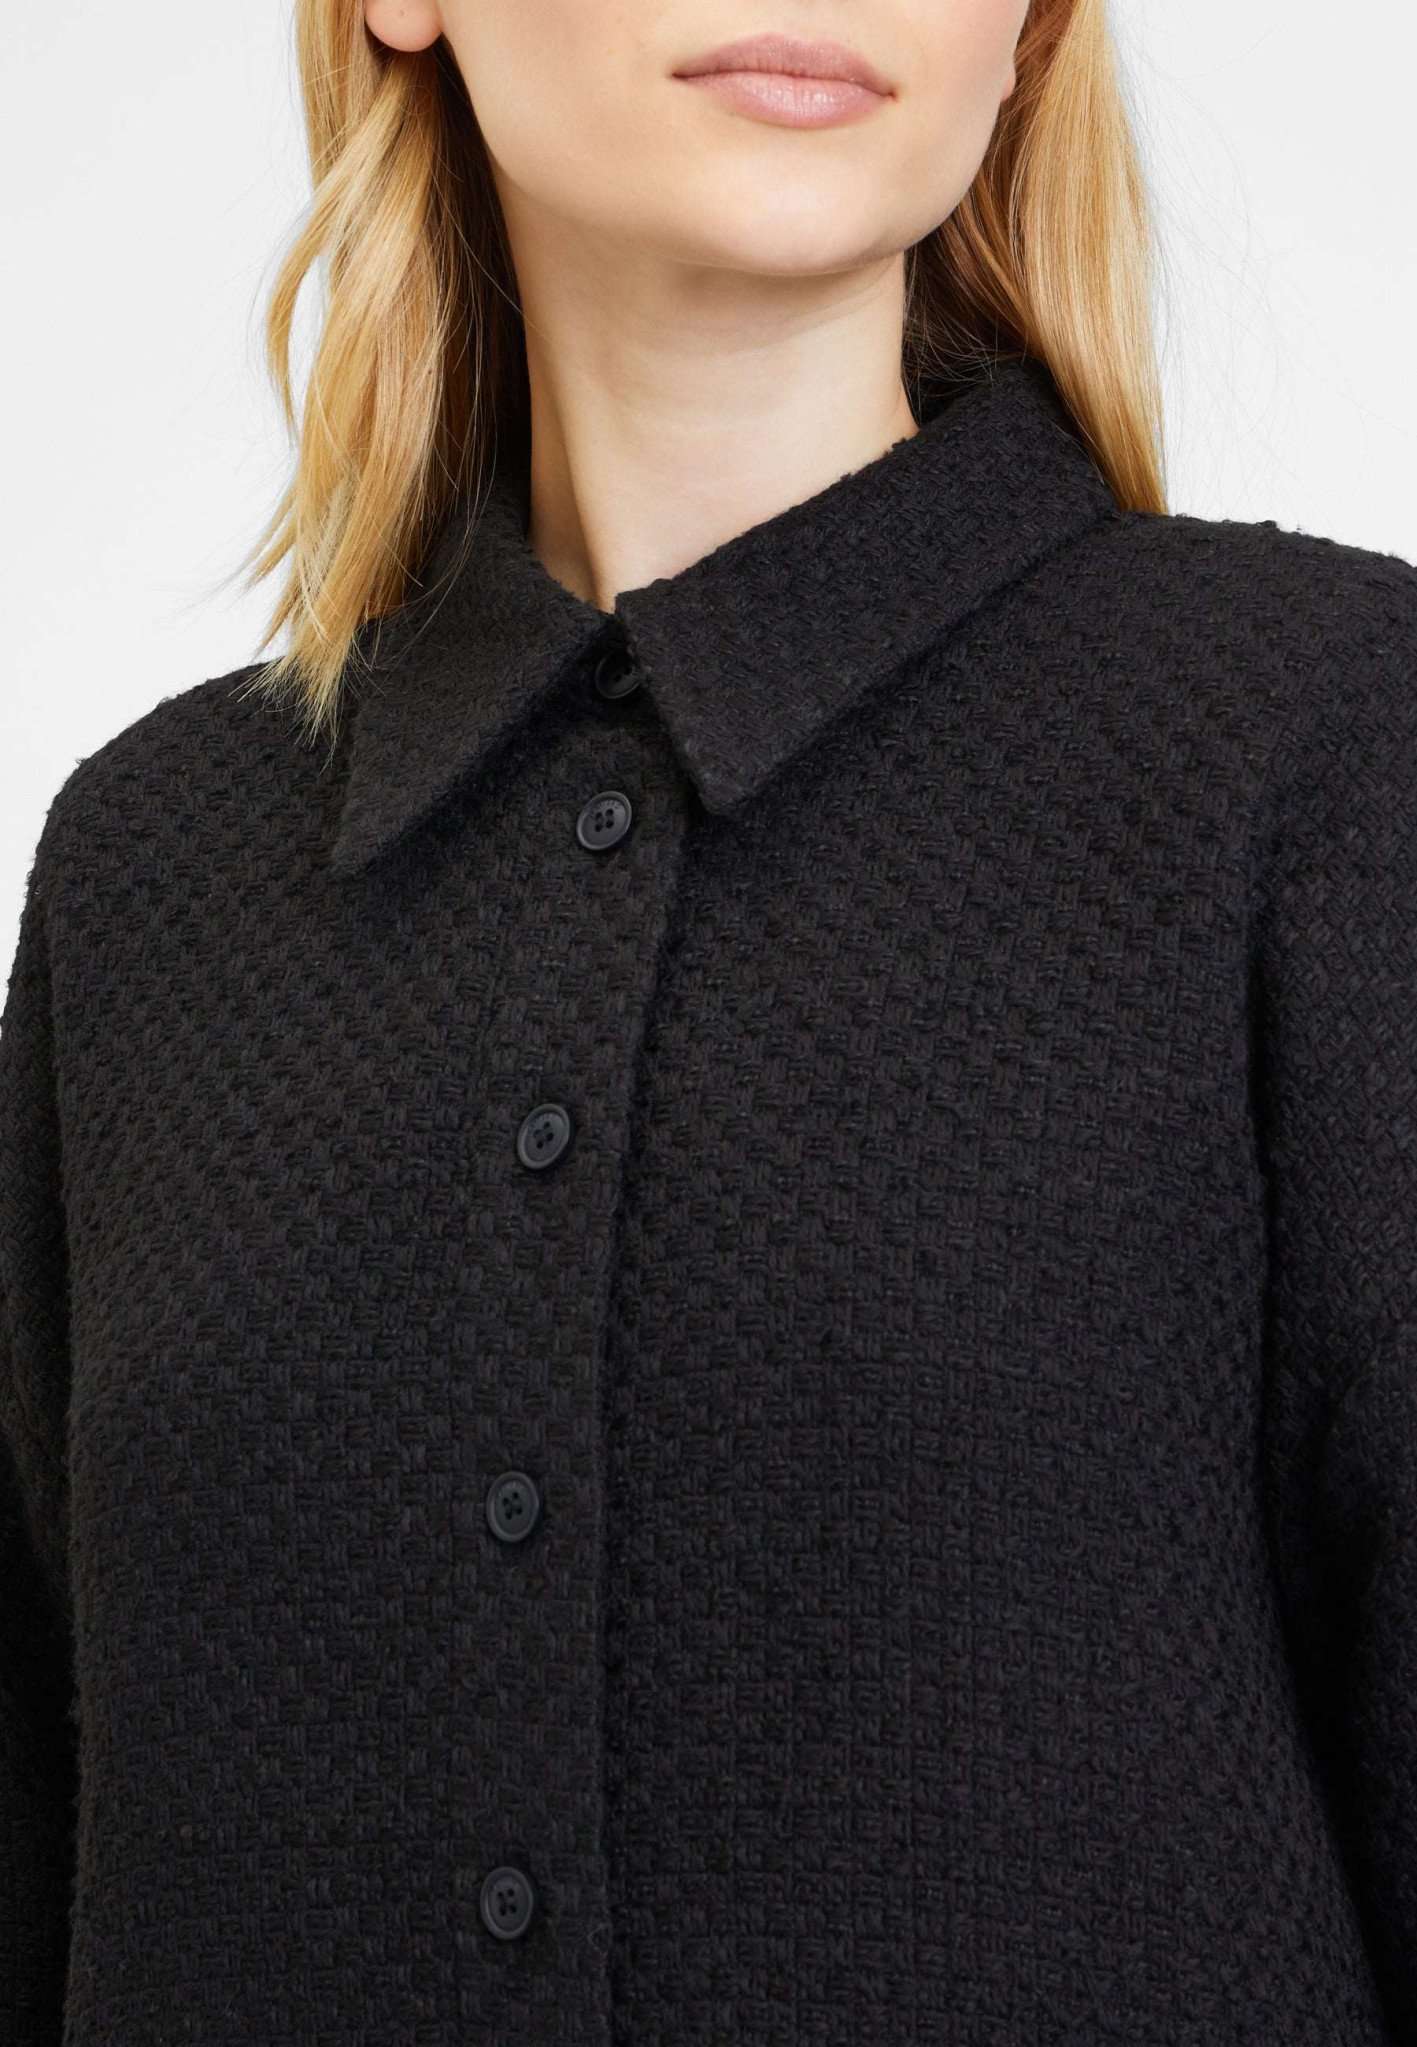 Bebra Bouclé Shirt in Black Beauty Hemden Tamaris   